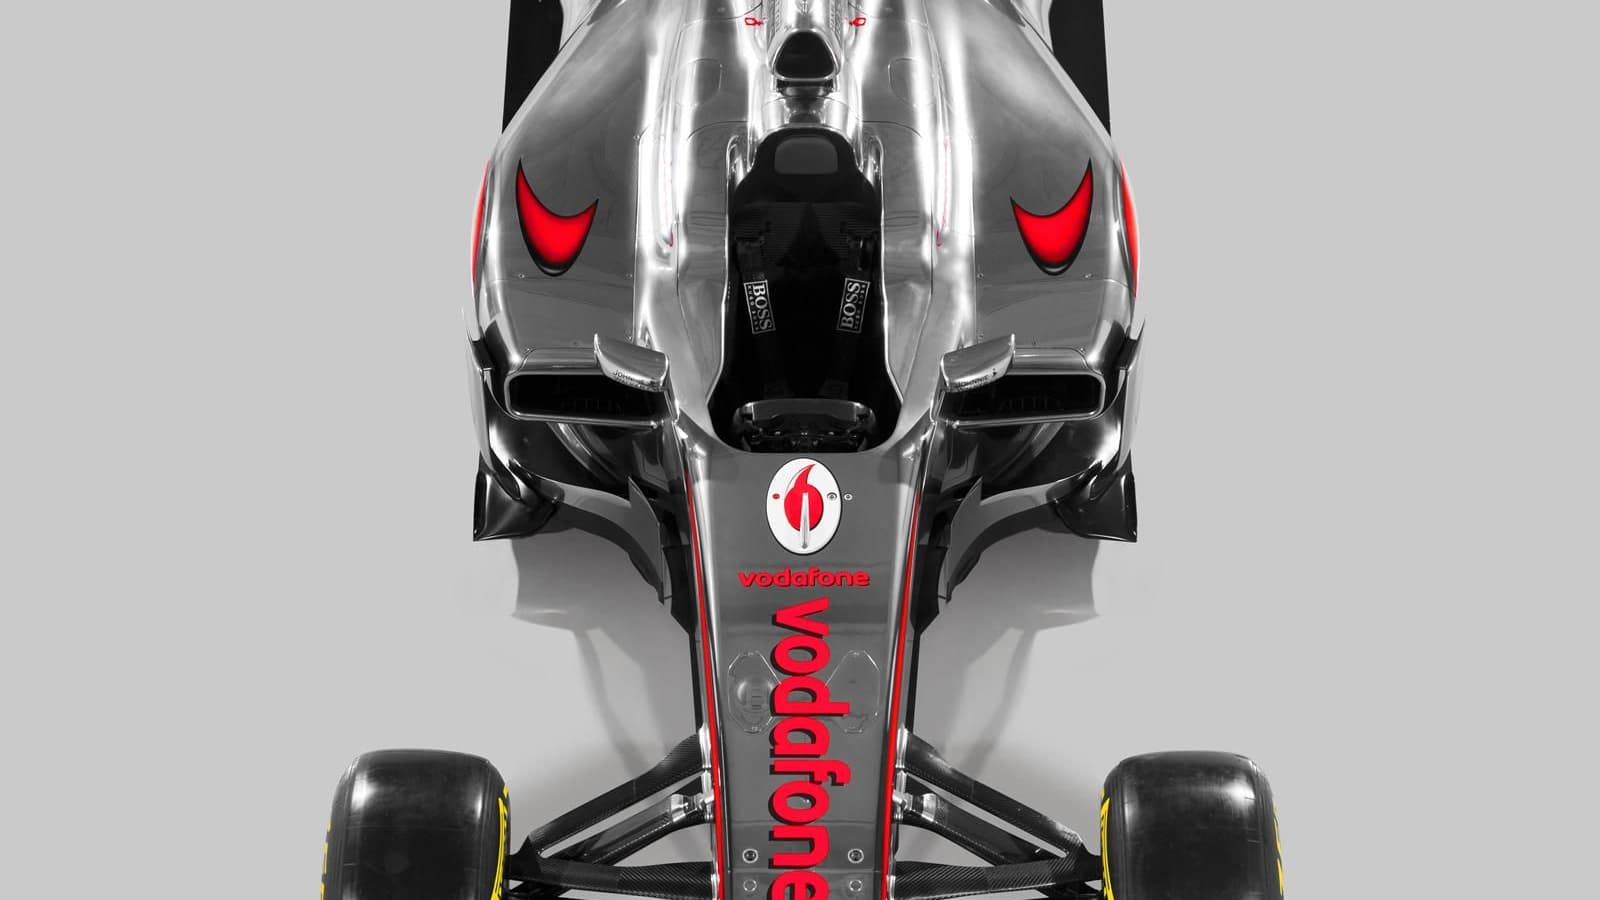 McLaren MP4-27 2012 Formula 1 race car 